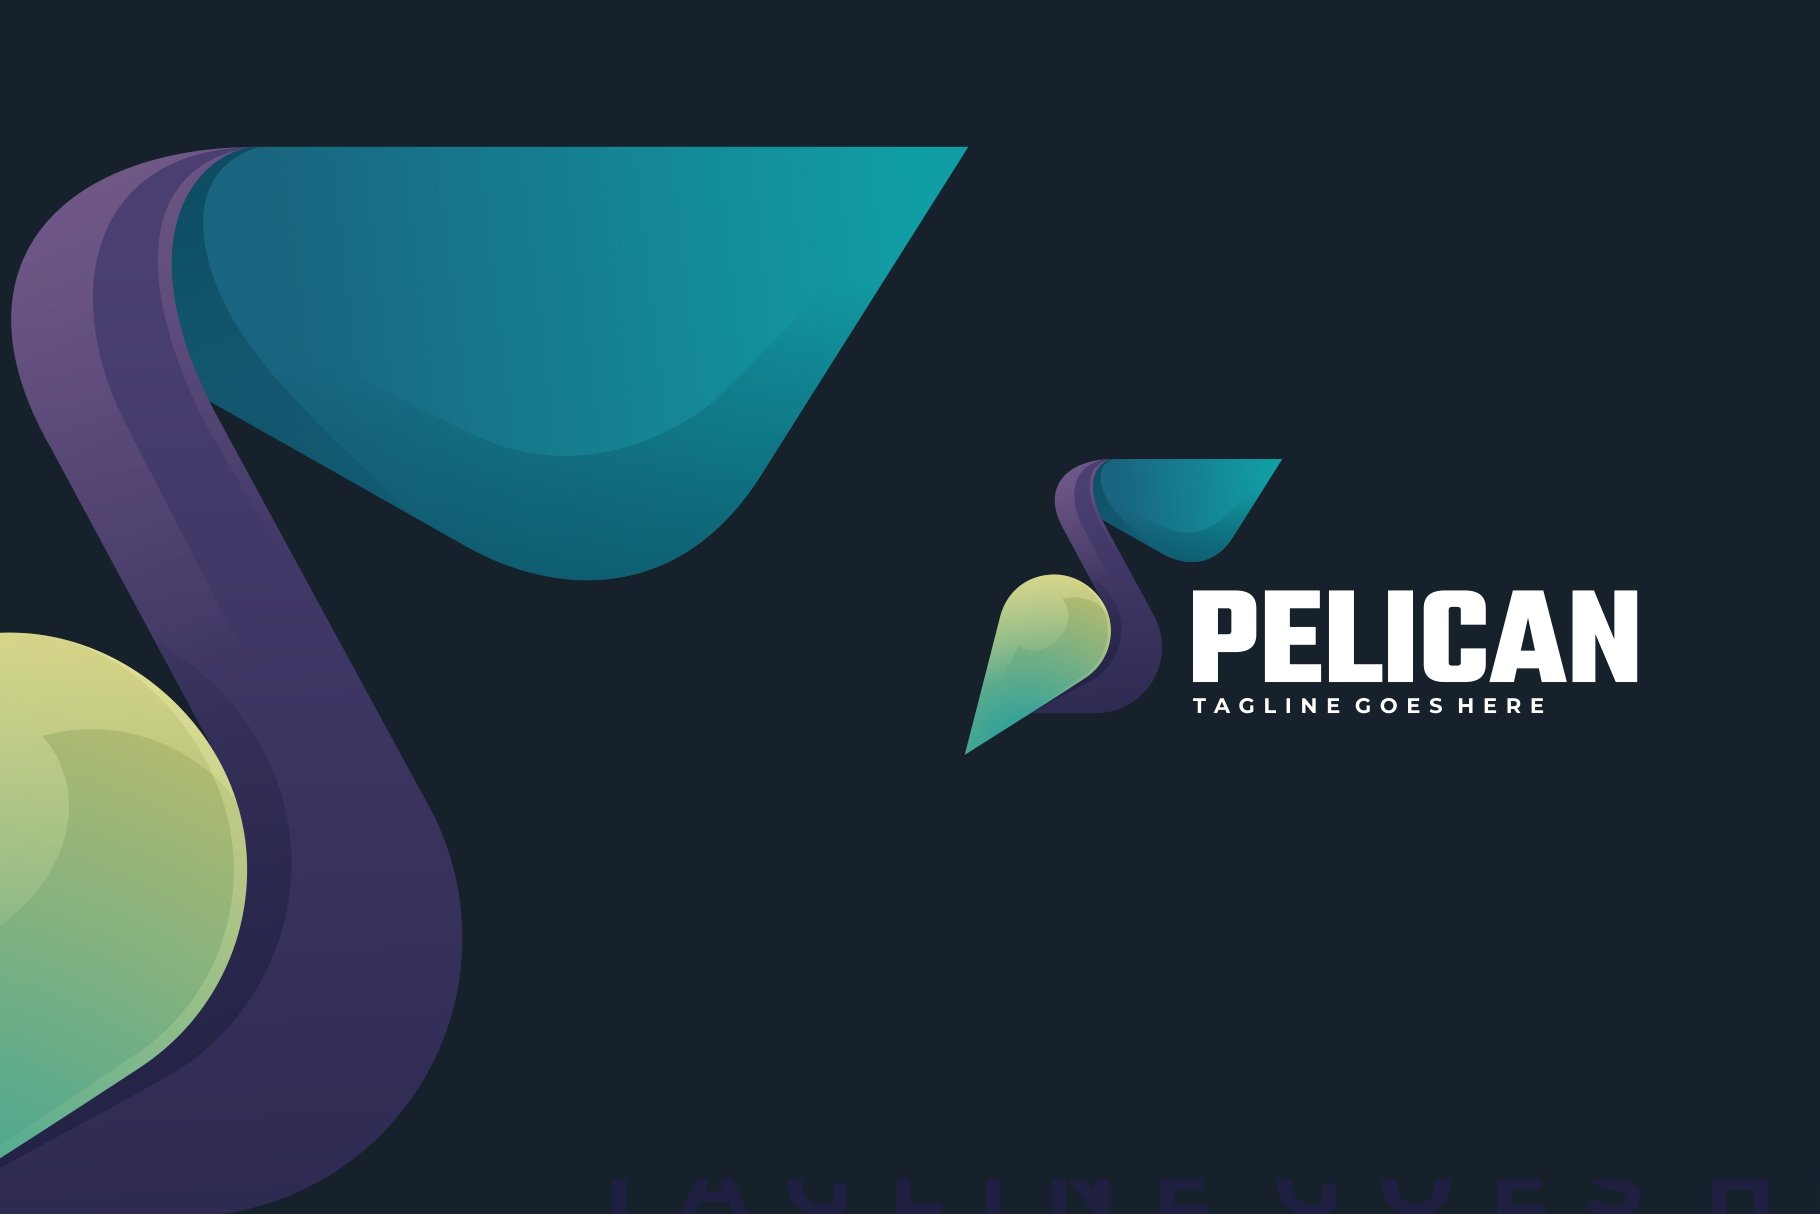 Pelican Gradient Colorful Logo cover image.